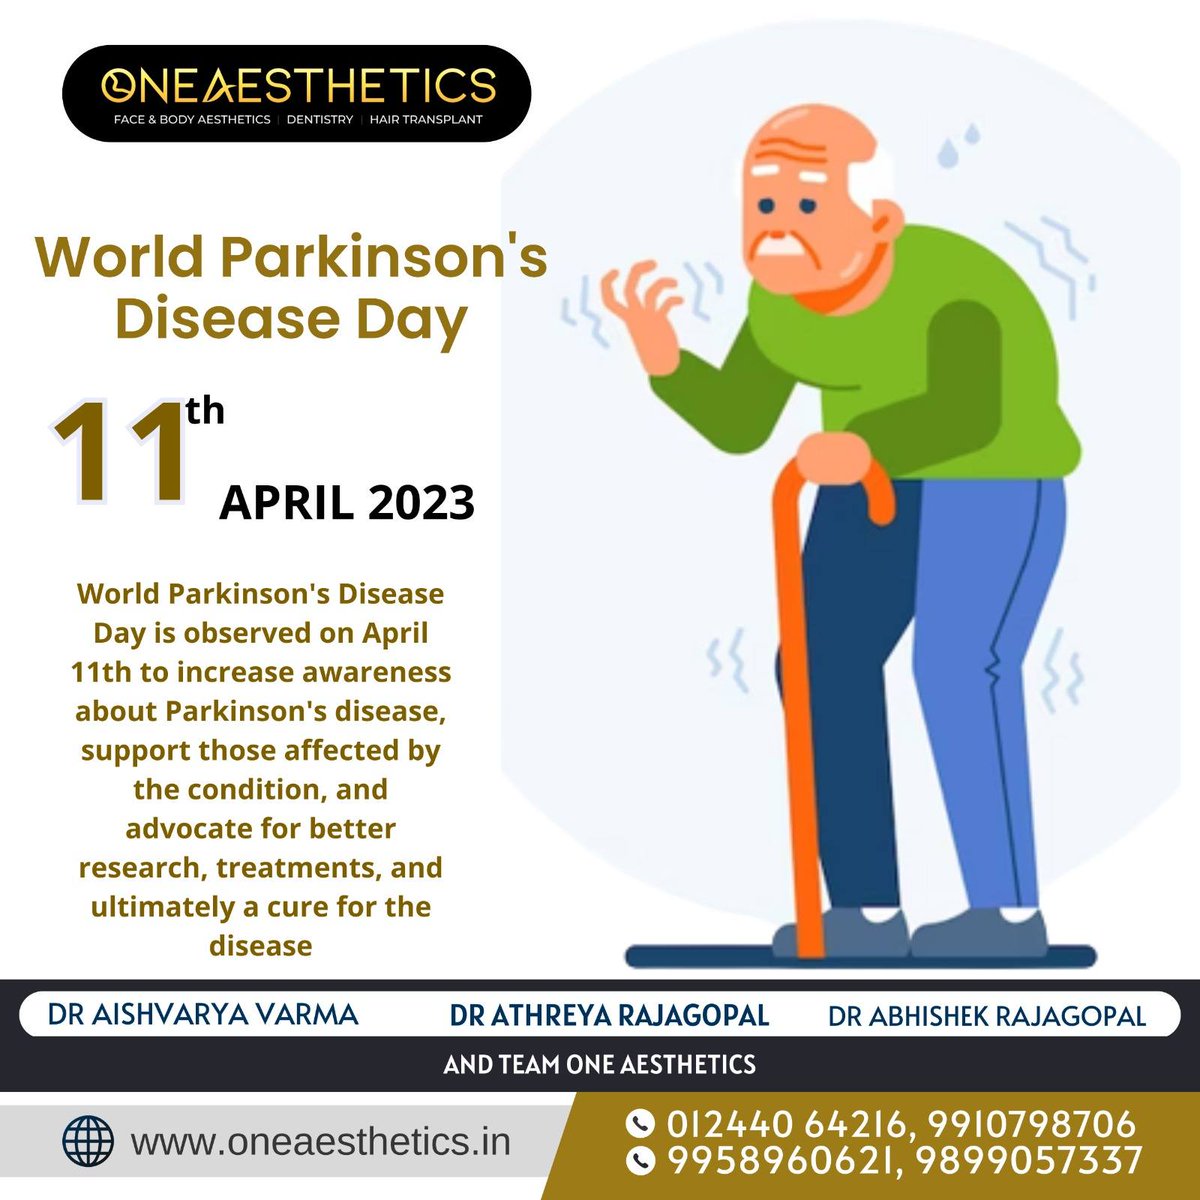 World Parkinson's Disease Day
One Aesthetics

#Worldparkinsonsdiseaseday #Parkinsonsdisease #parkinsons #parkinsonsawareness #parkinson #stroke #parkinsonswarrior #parkinsonsfitness #dementia #Parkinsonsdiseasetreatment